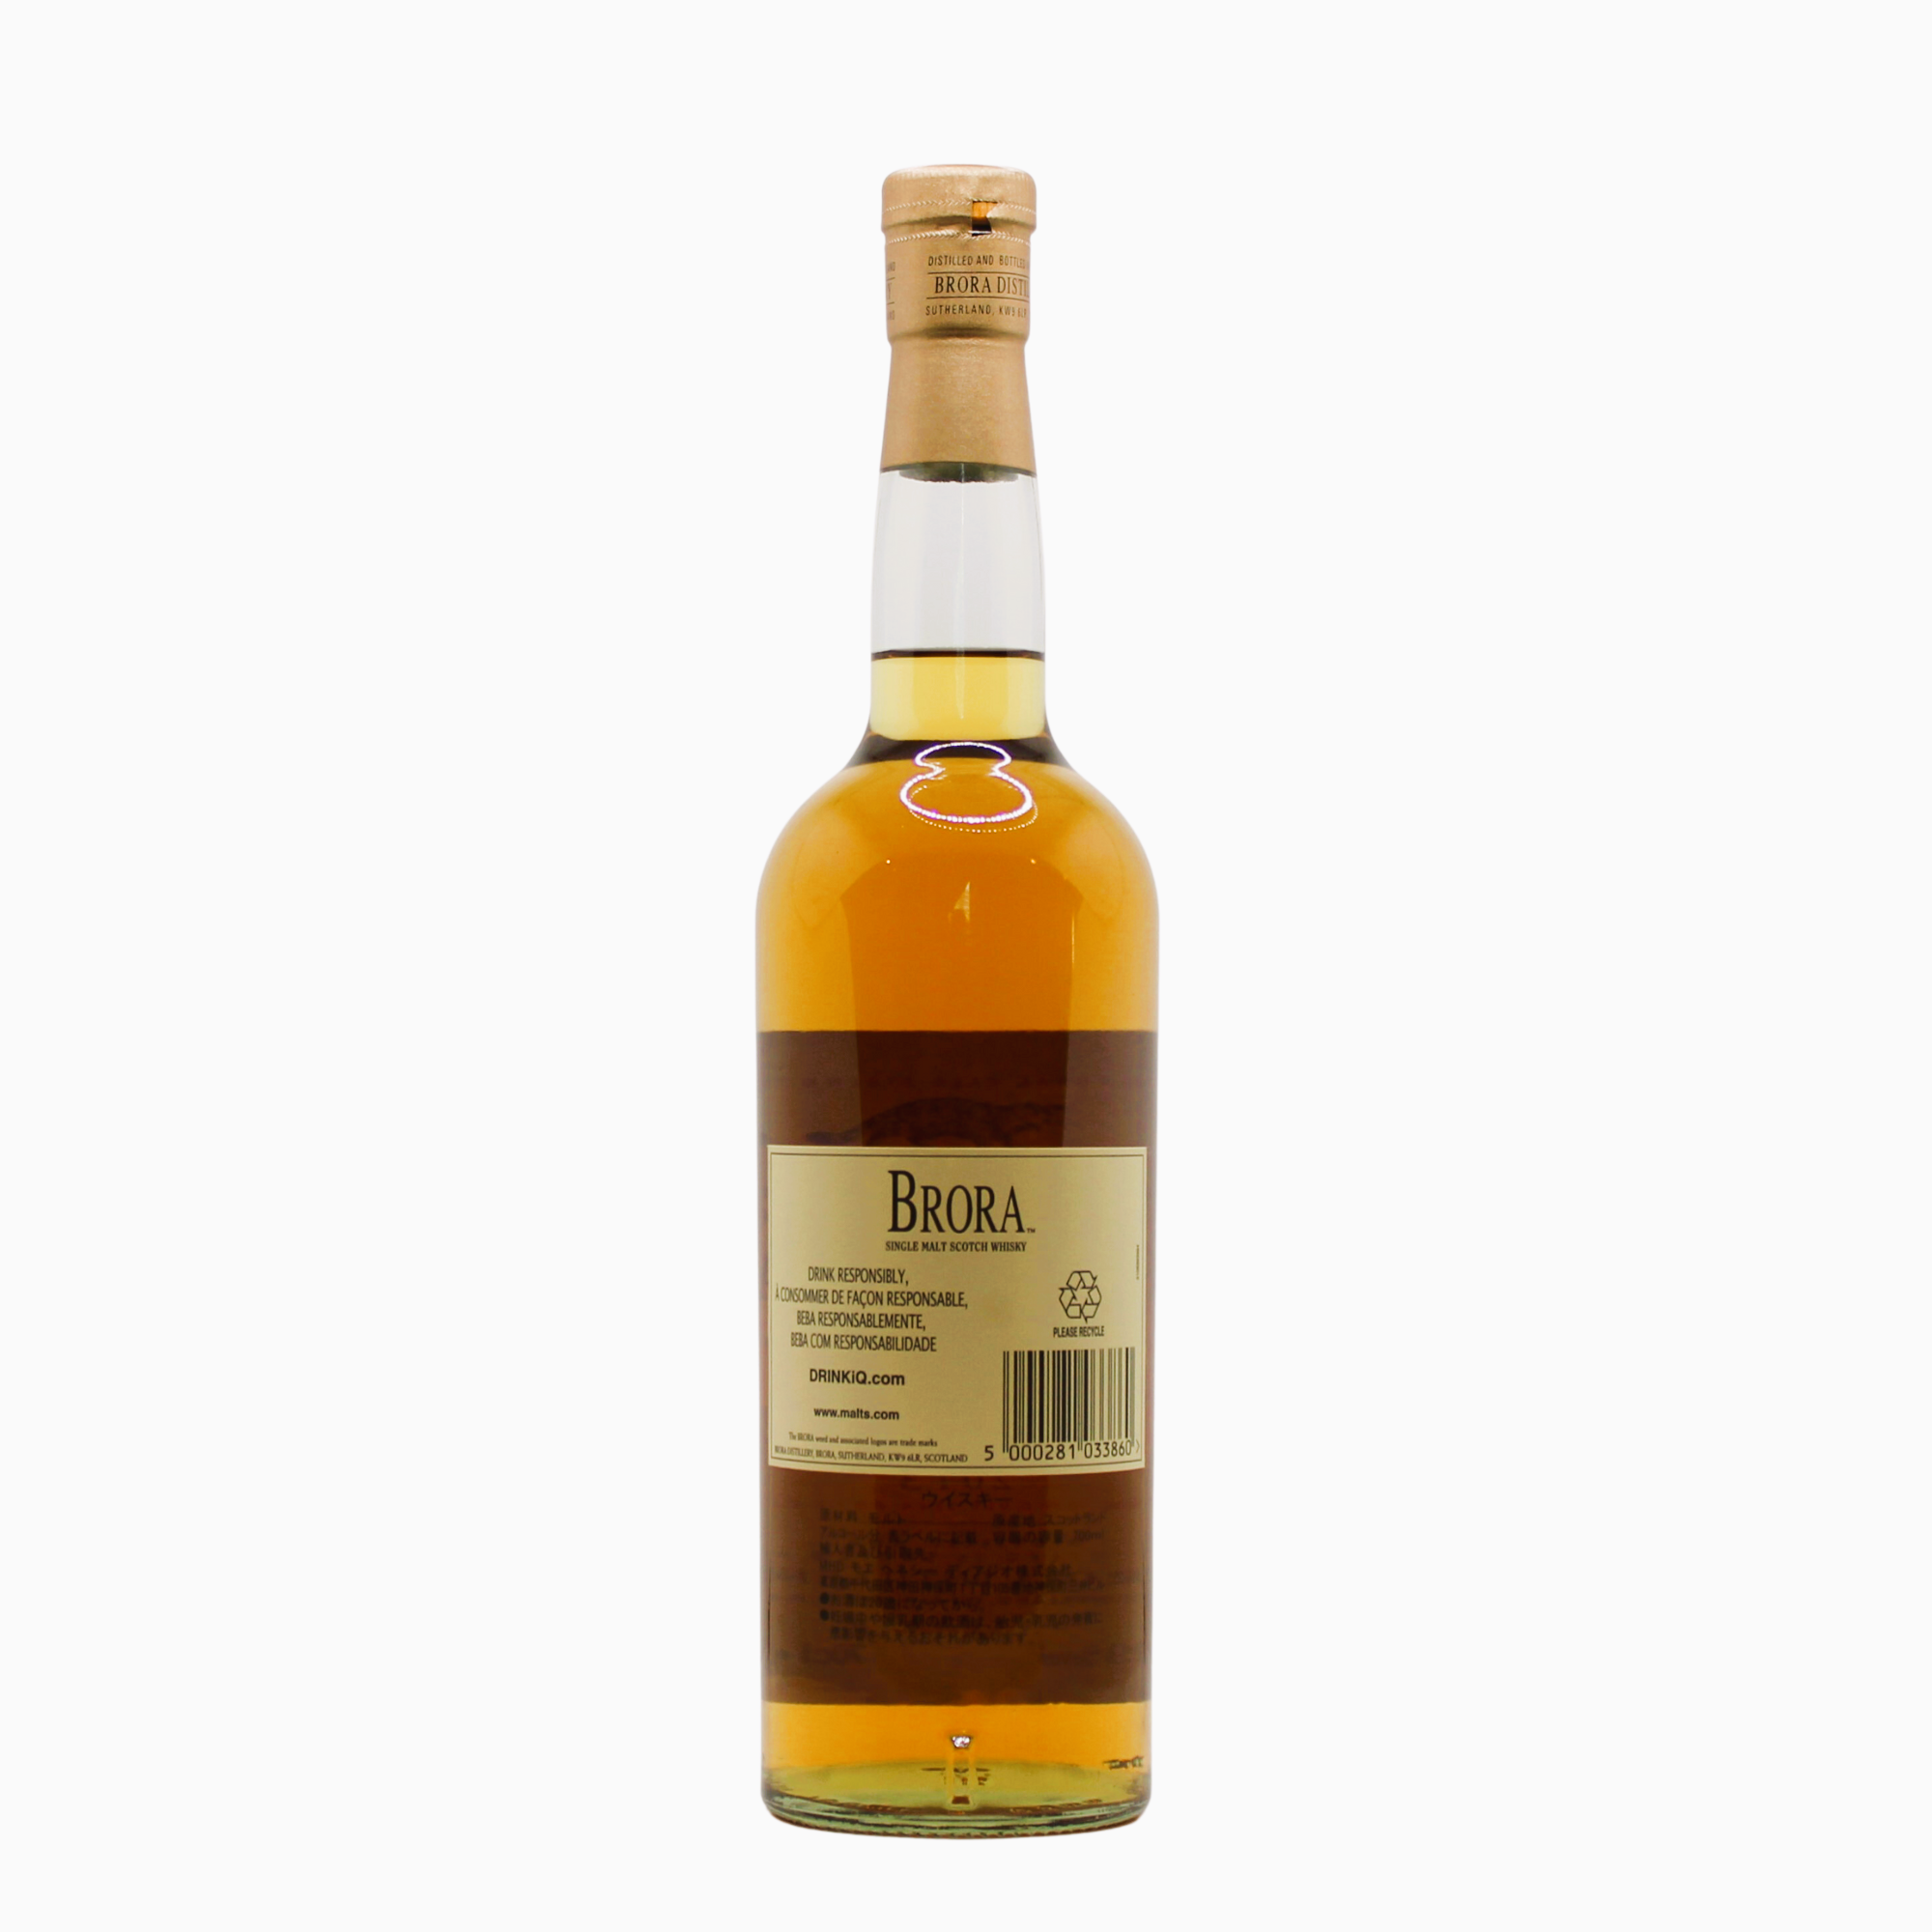 Brora 1977 Single Malt Scotch Whisky 12th Release 2013, 35 Years Old (NO BOX)